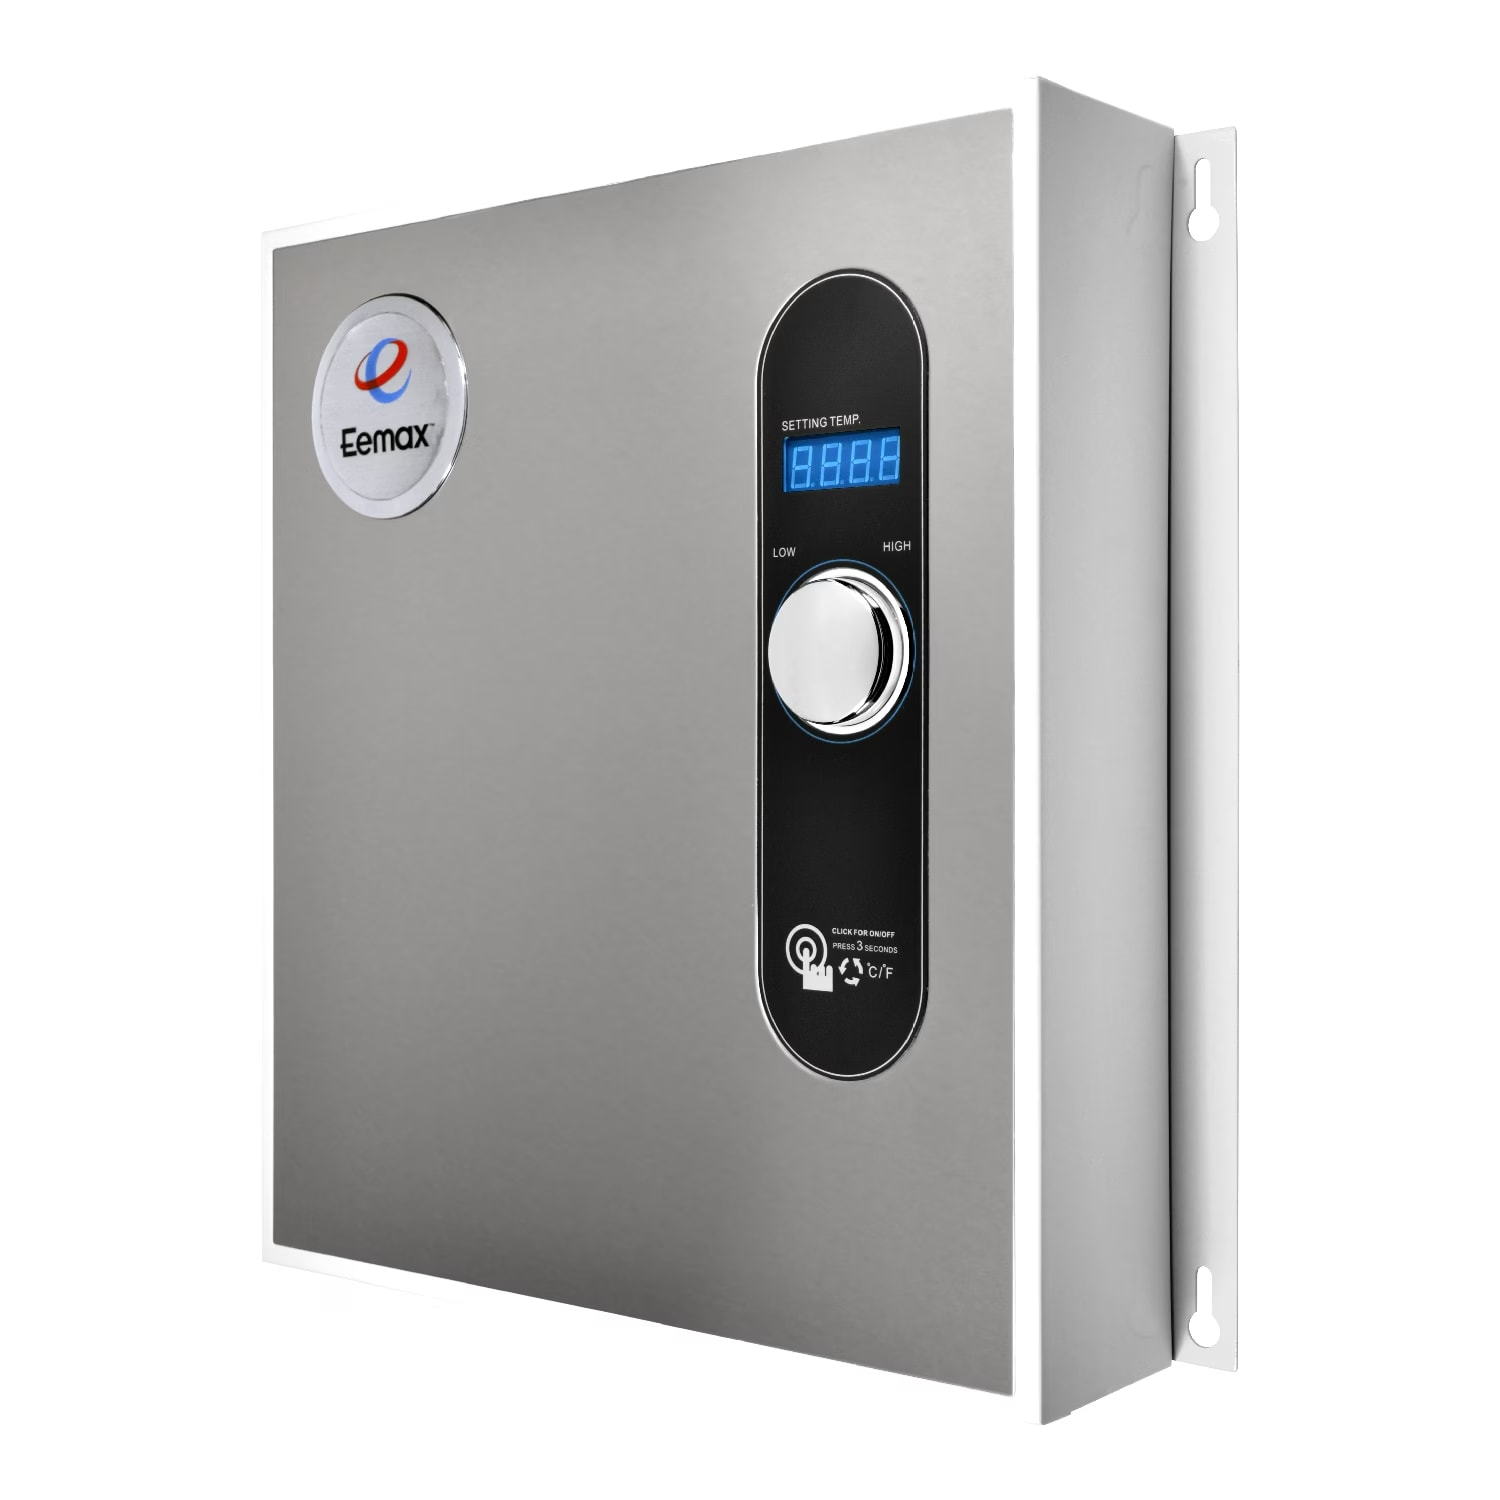 Eemax HA027 Electric Tankless Water Heater